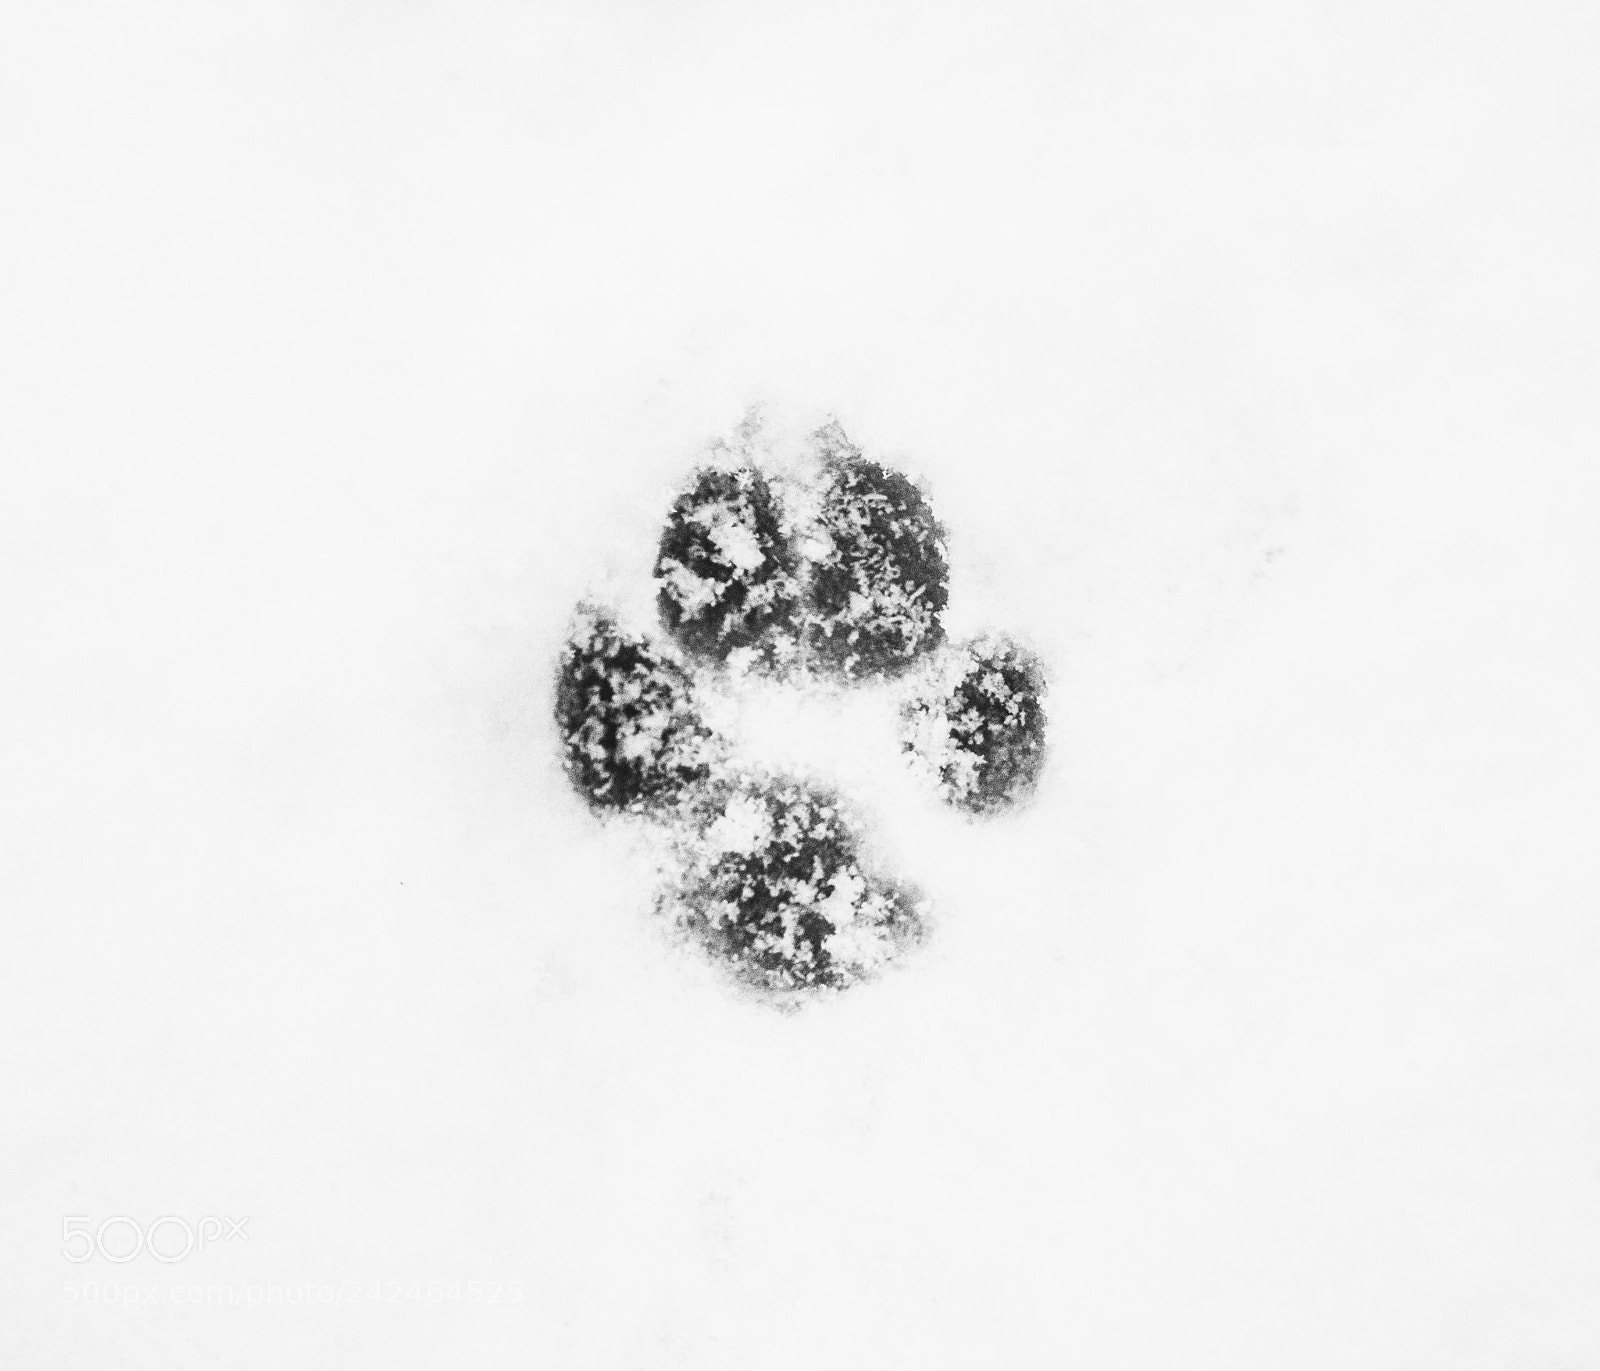 Sony SLT-A55 (SLT-A55V) sample photo. Tracks in the snow photography